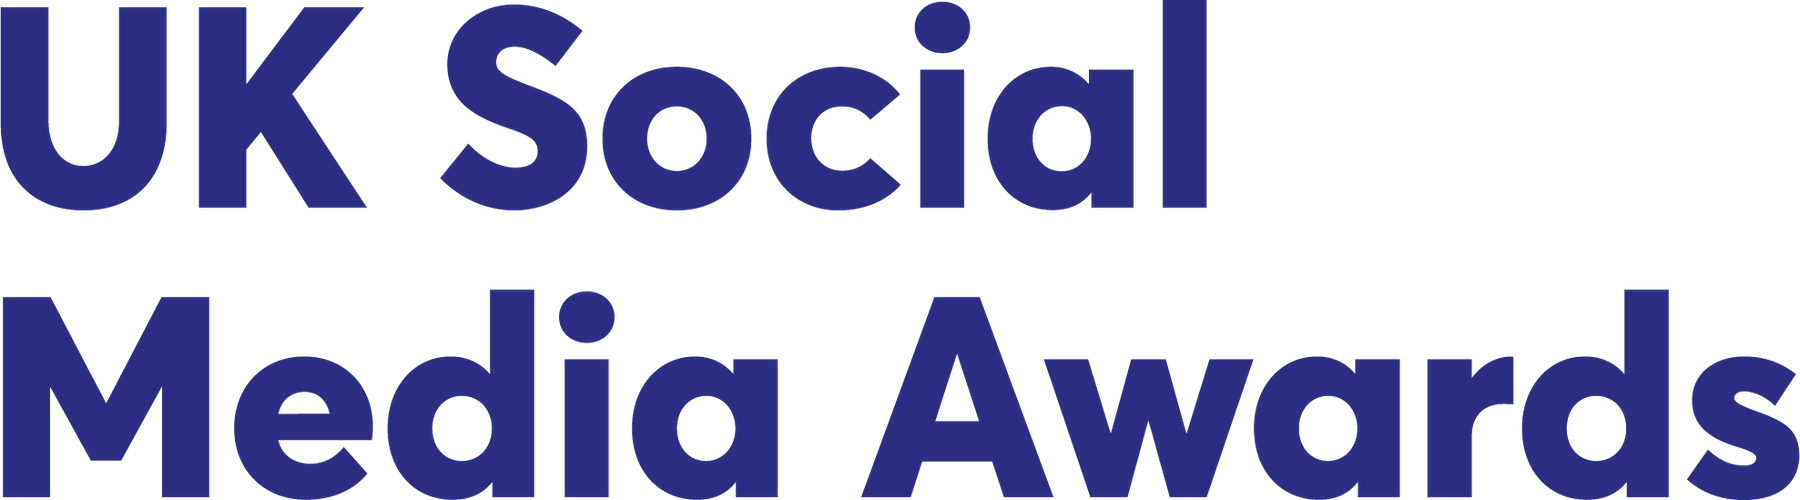 UK Social Media Awards logo